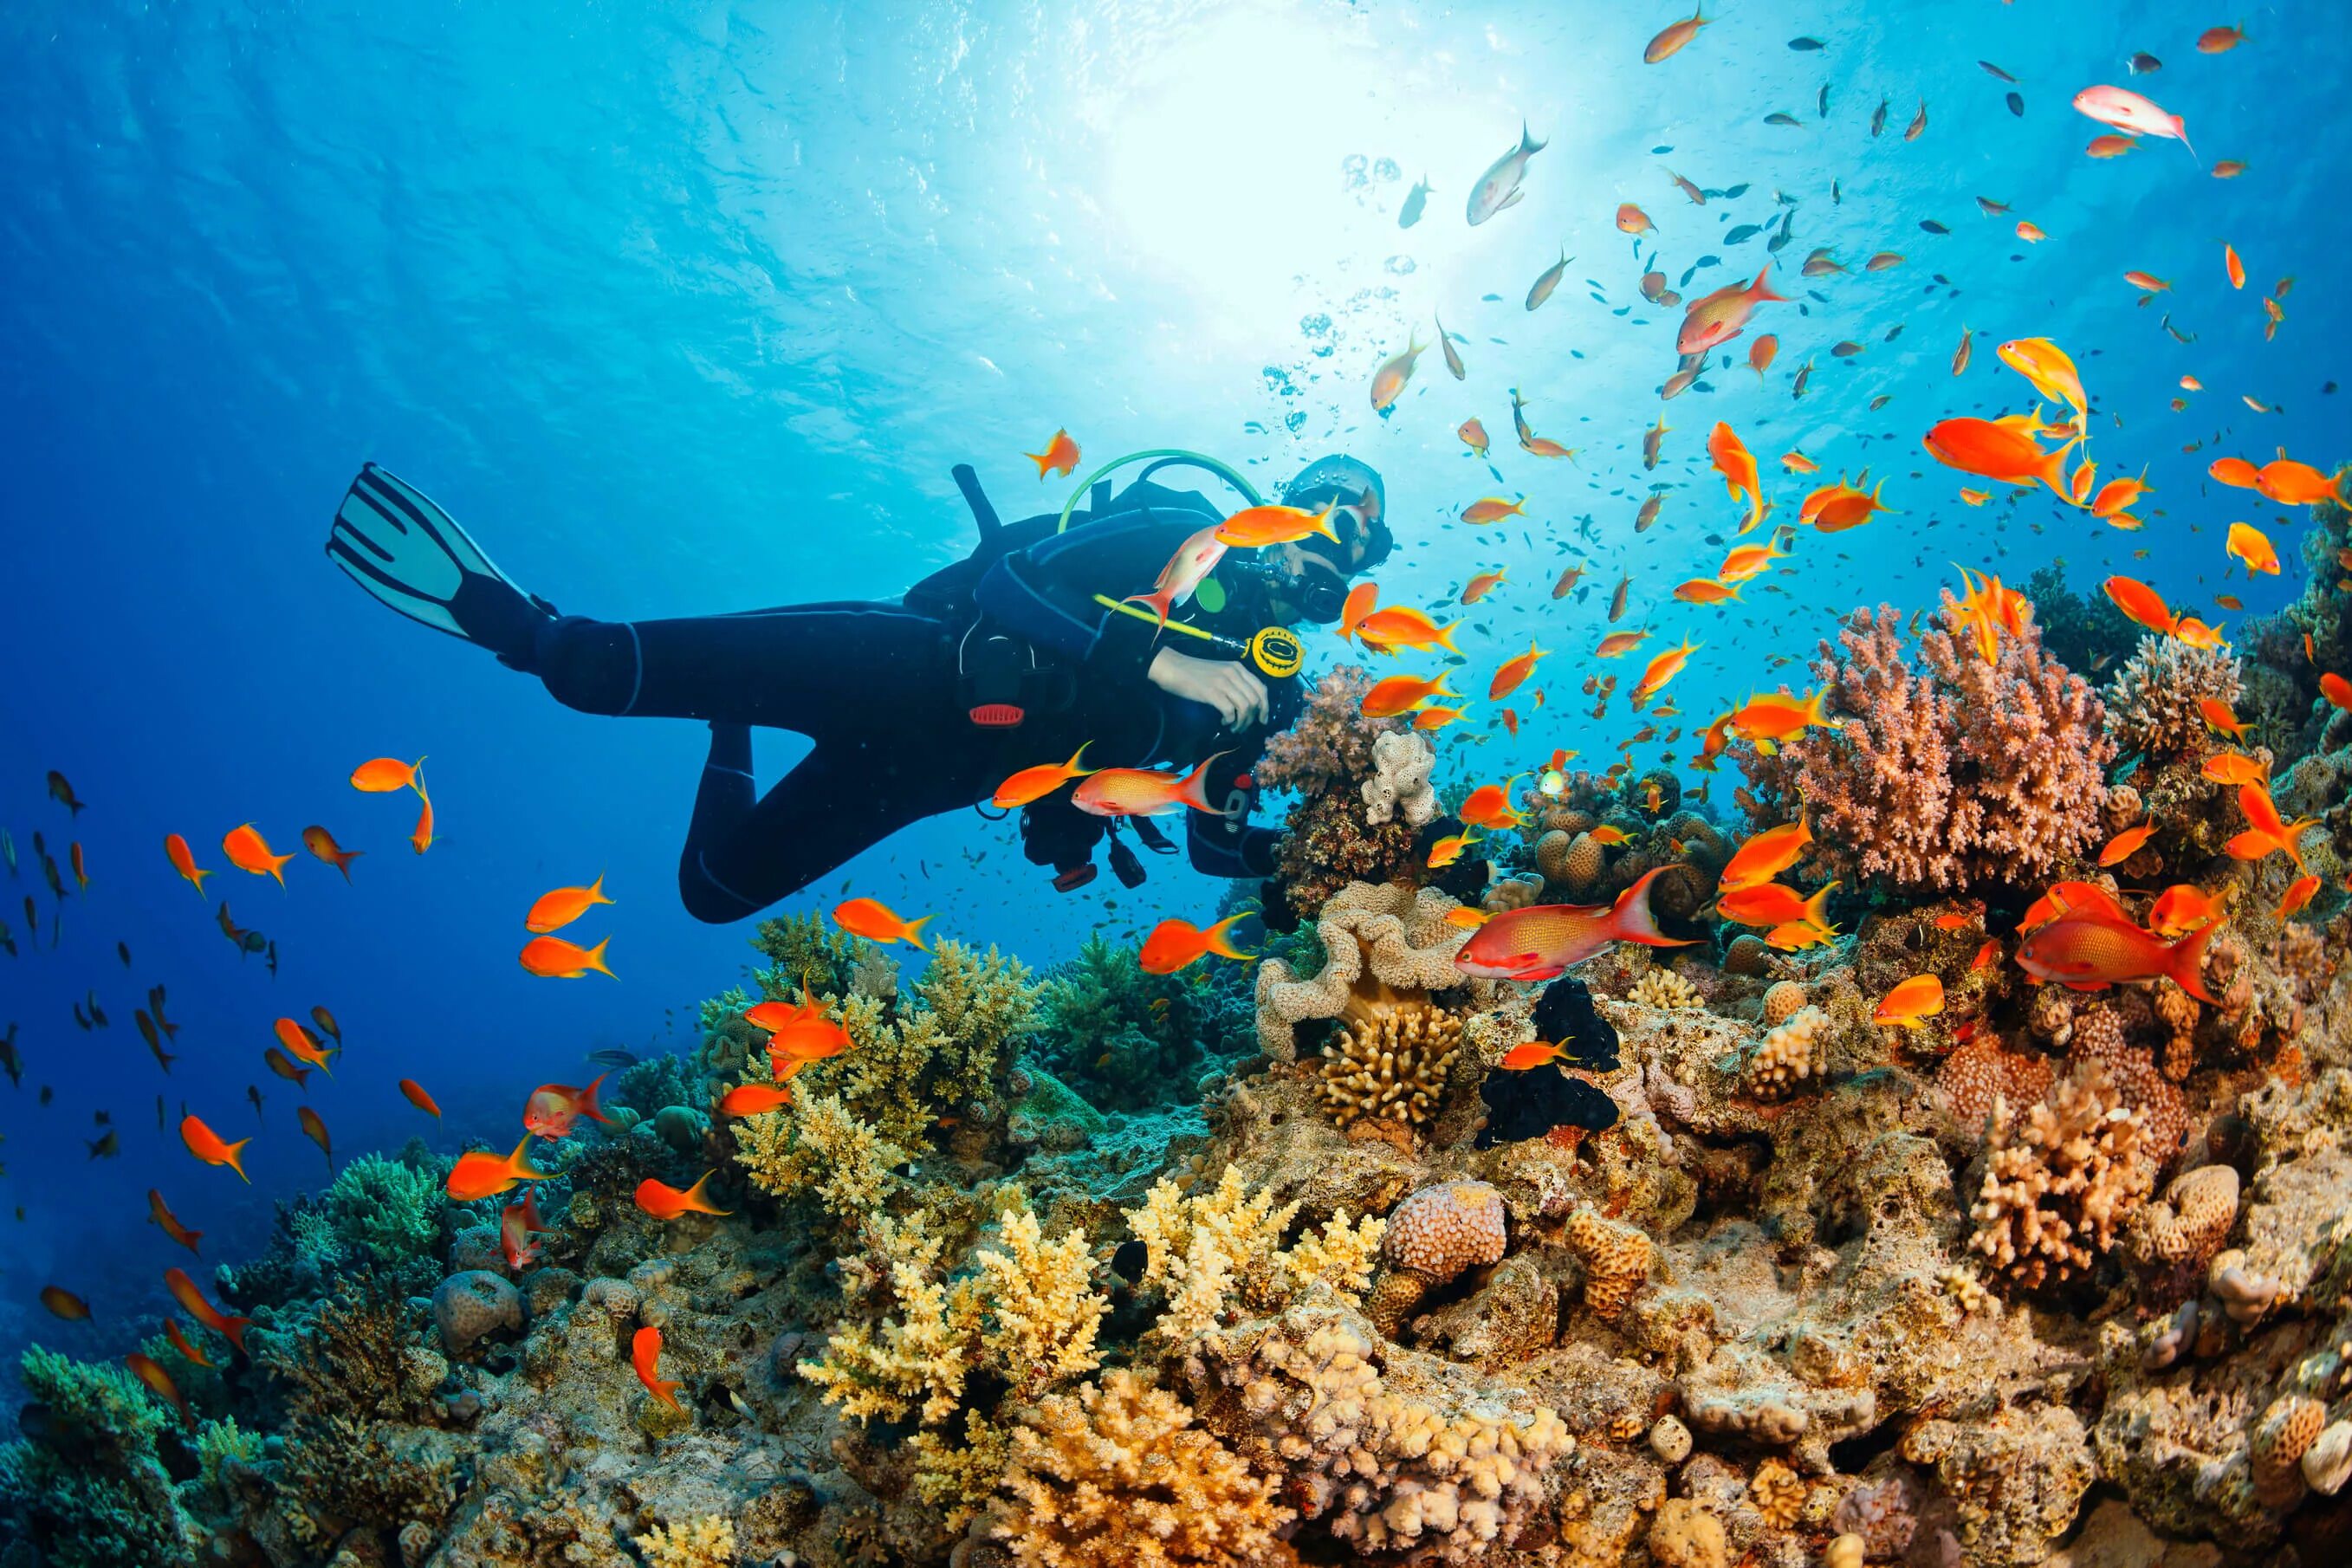 Reef tourism. Снорклинг Шарм Эль Шейх. Шарм-Эль-Шейх риф снорклинг. Подводный мир Египта Шарм-Эль-Шейх. Морской парк на рифах Туббатаха.